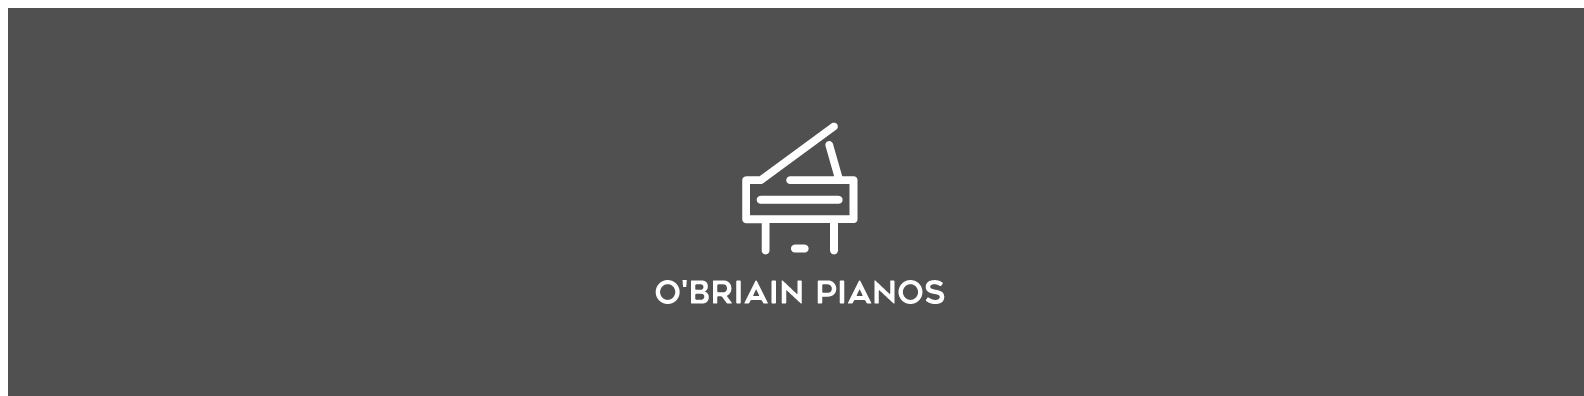 O'Briain Pianos |  New & Used Pianos for Sale | Lucan, Dublin, Ireland-O'Briain Pianos